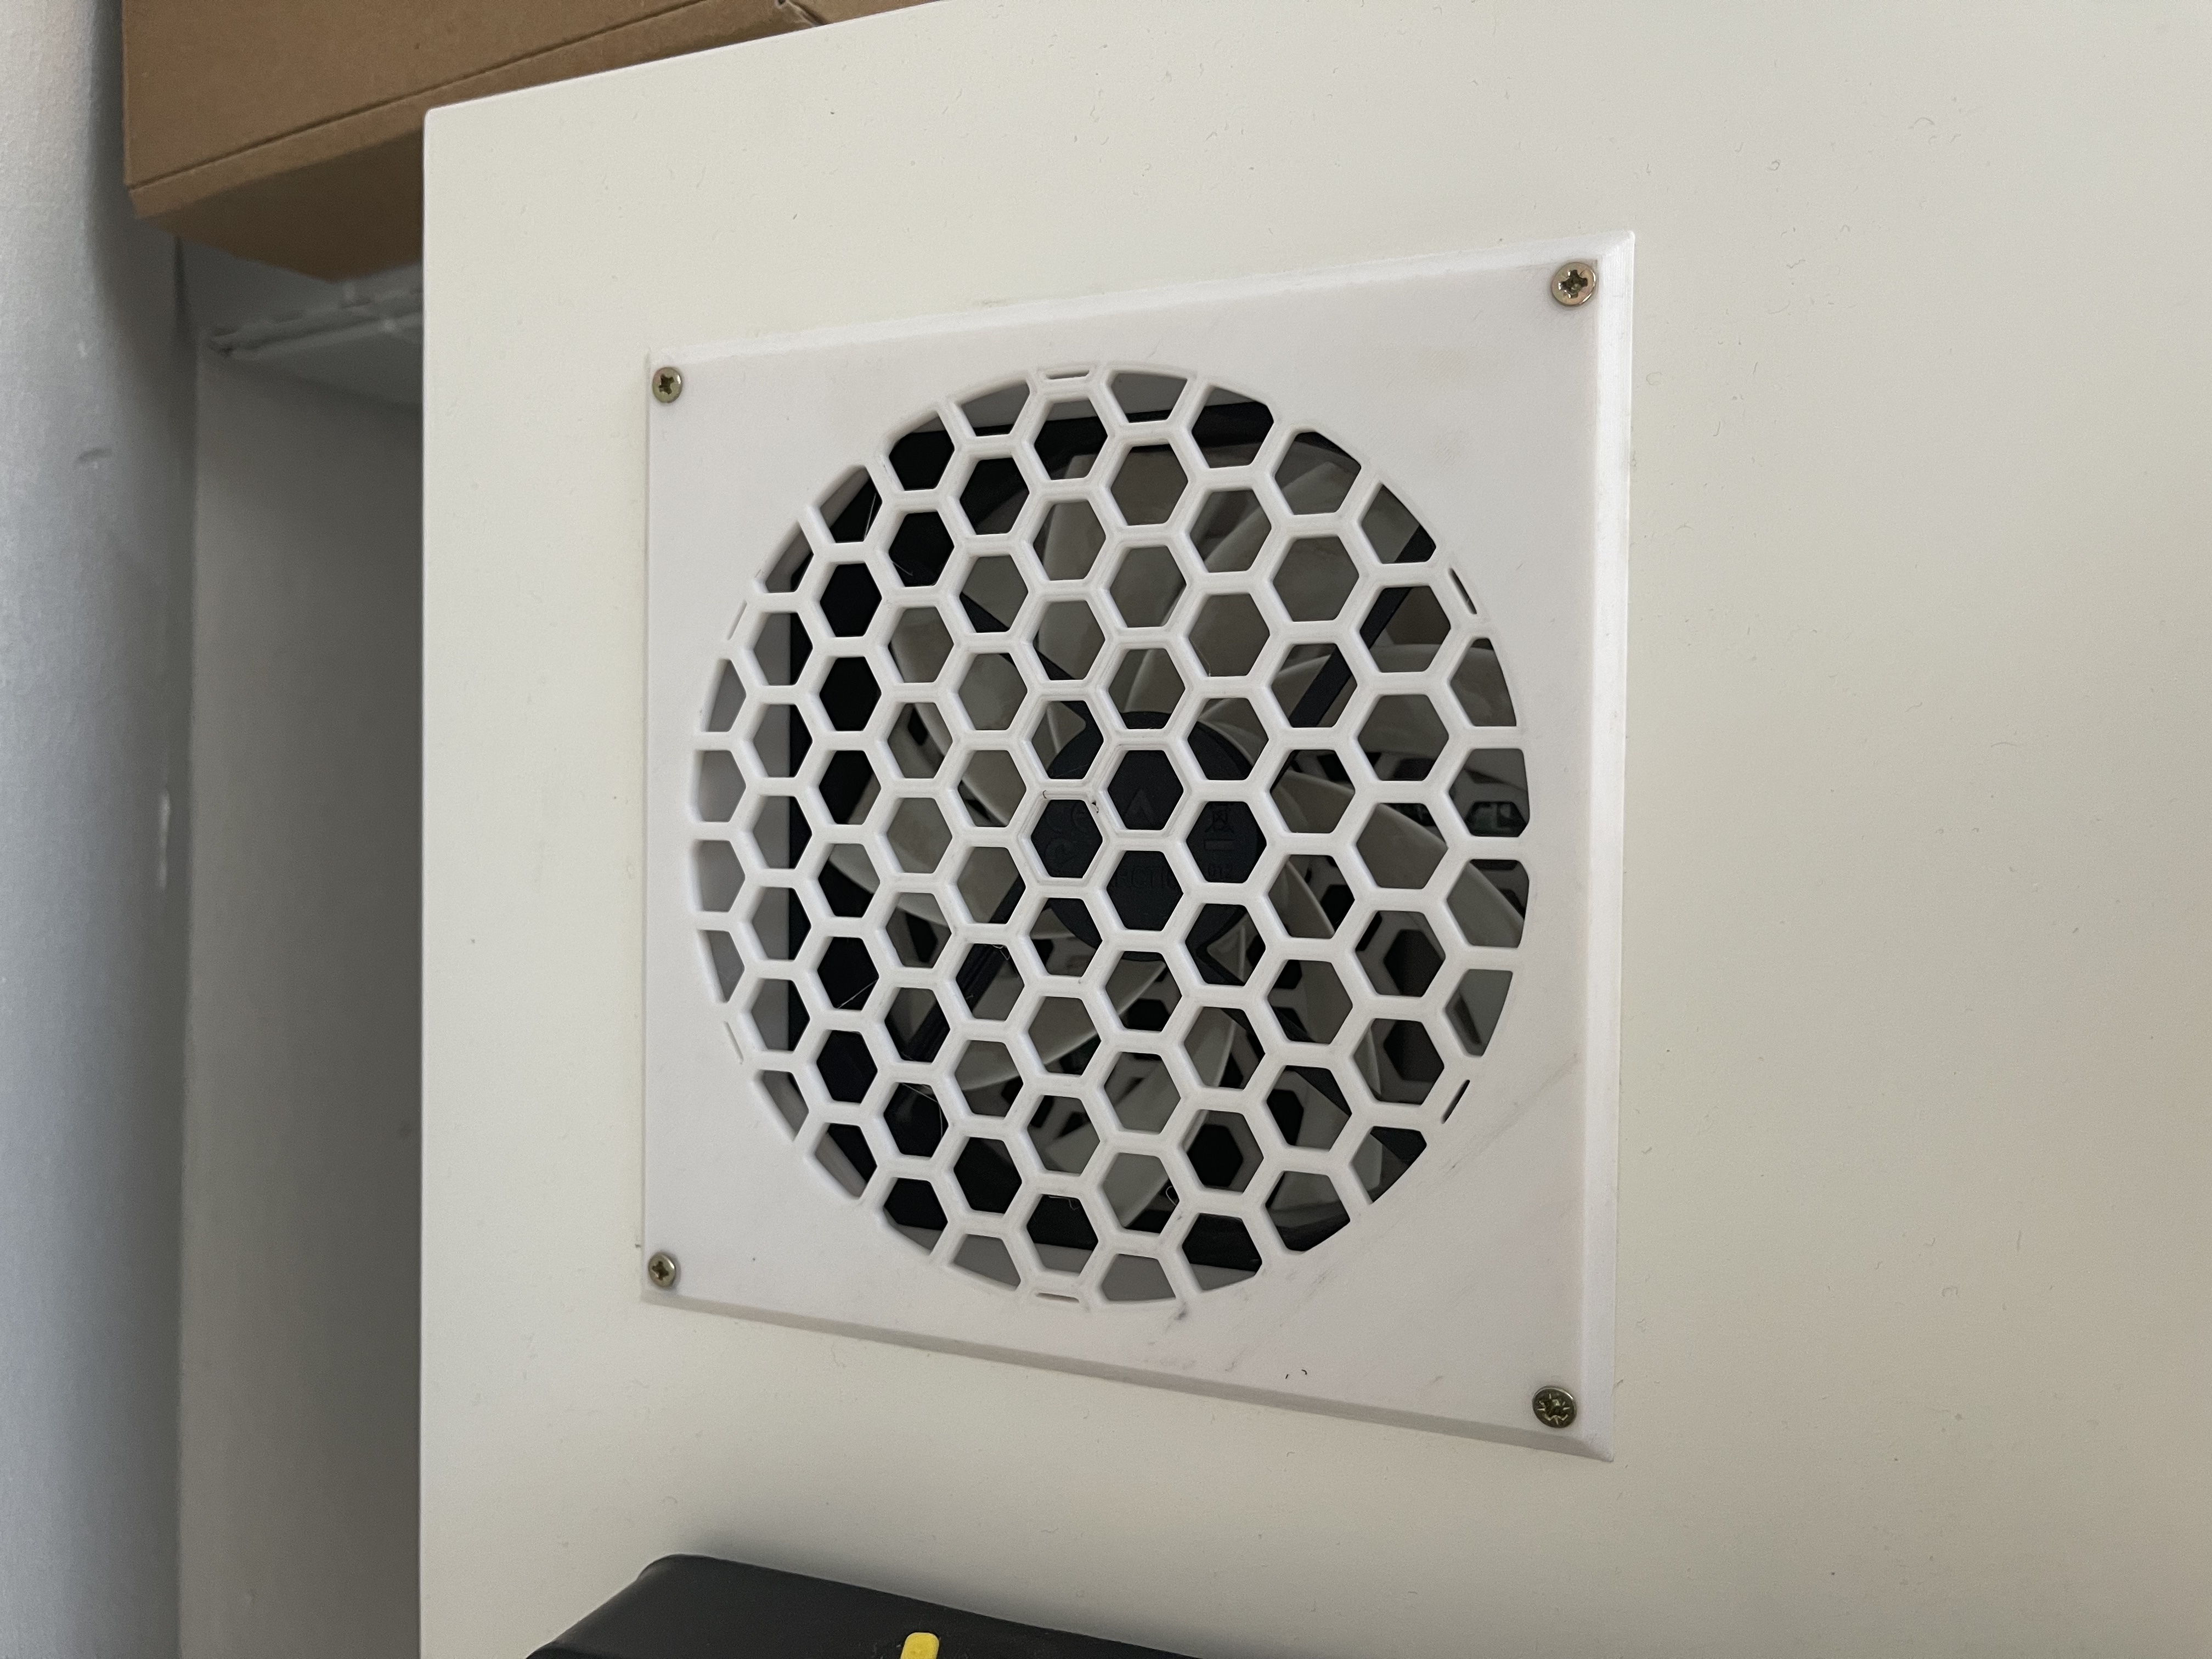 180mm fan mount for ikea lack printer enclosure